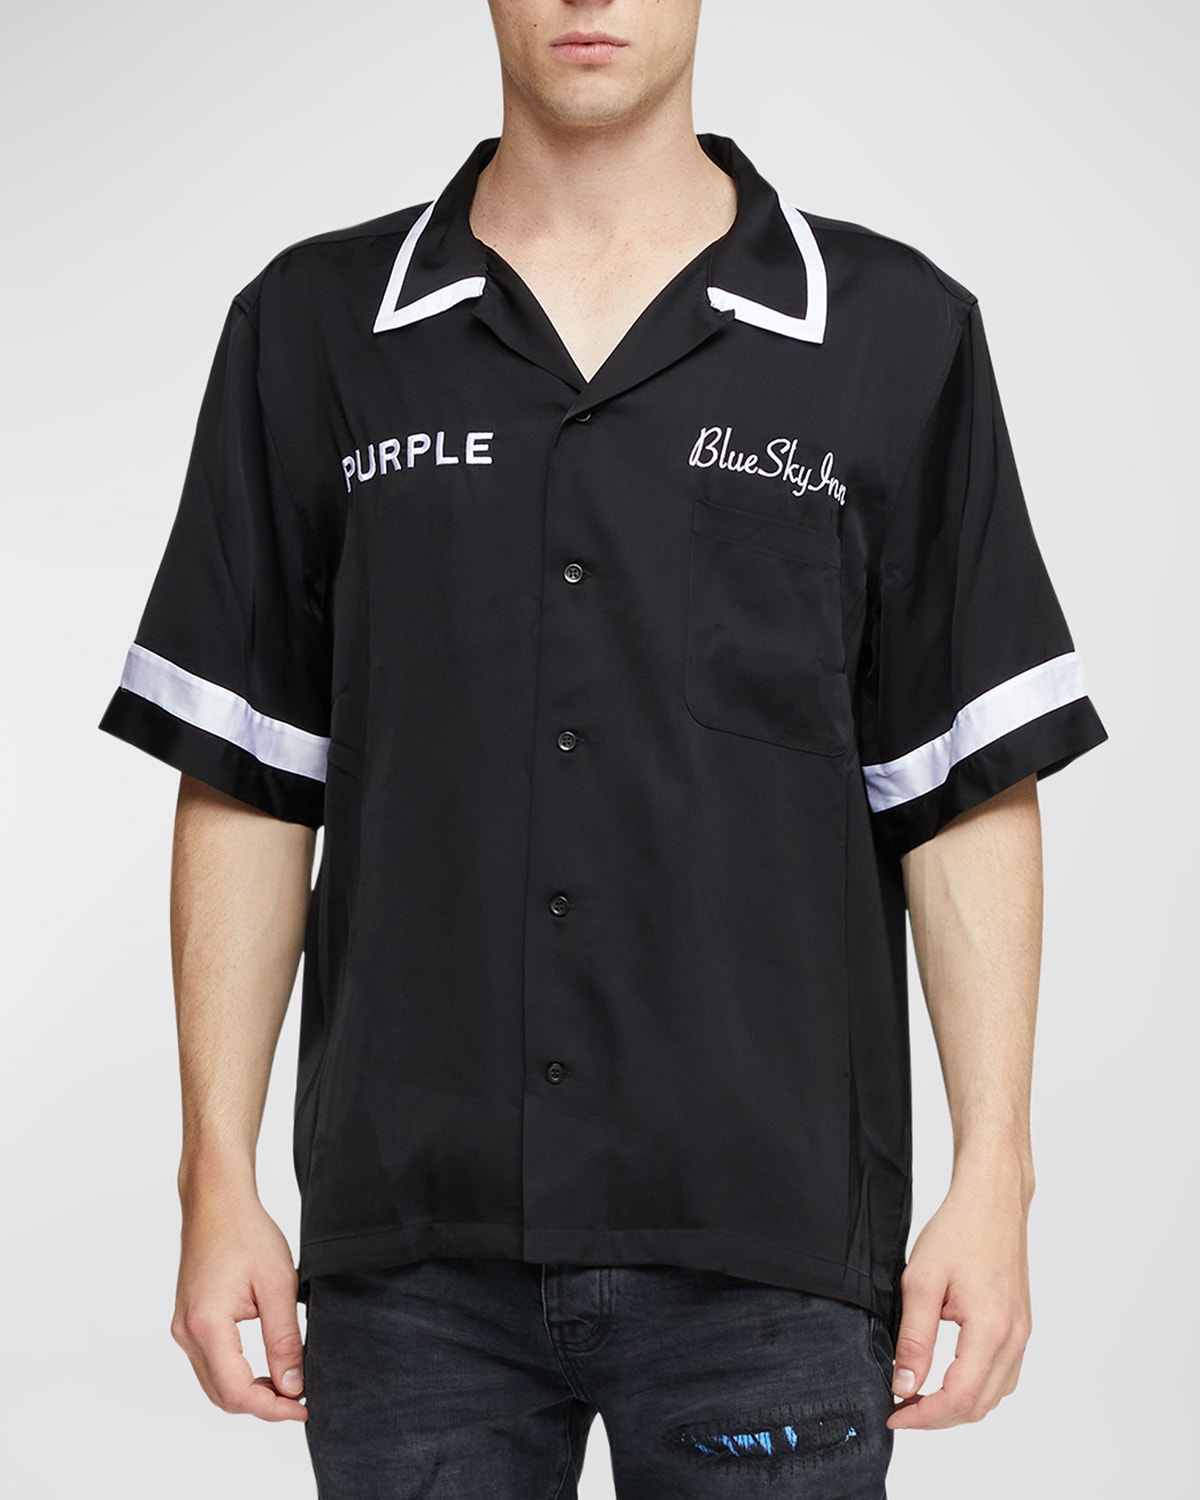 Men's PURPLE x Blue Sky Logo Contrast Trim Waiter Shirt